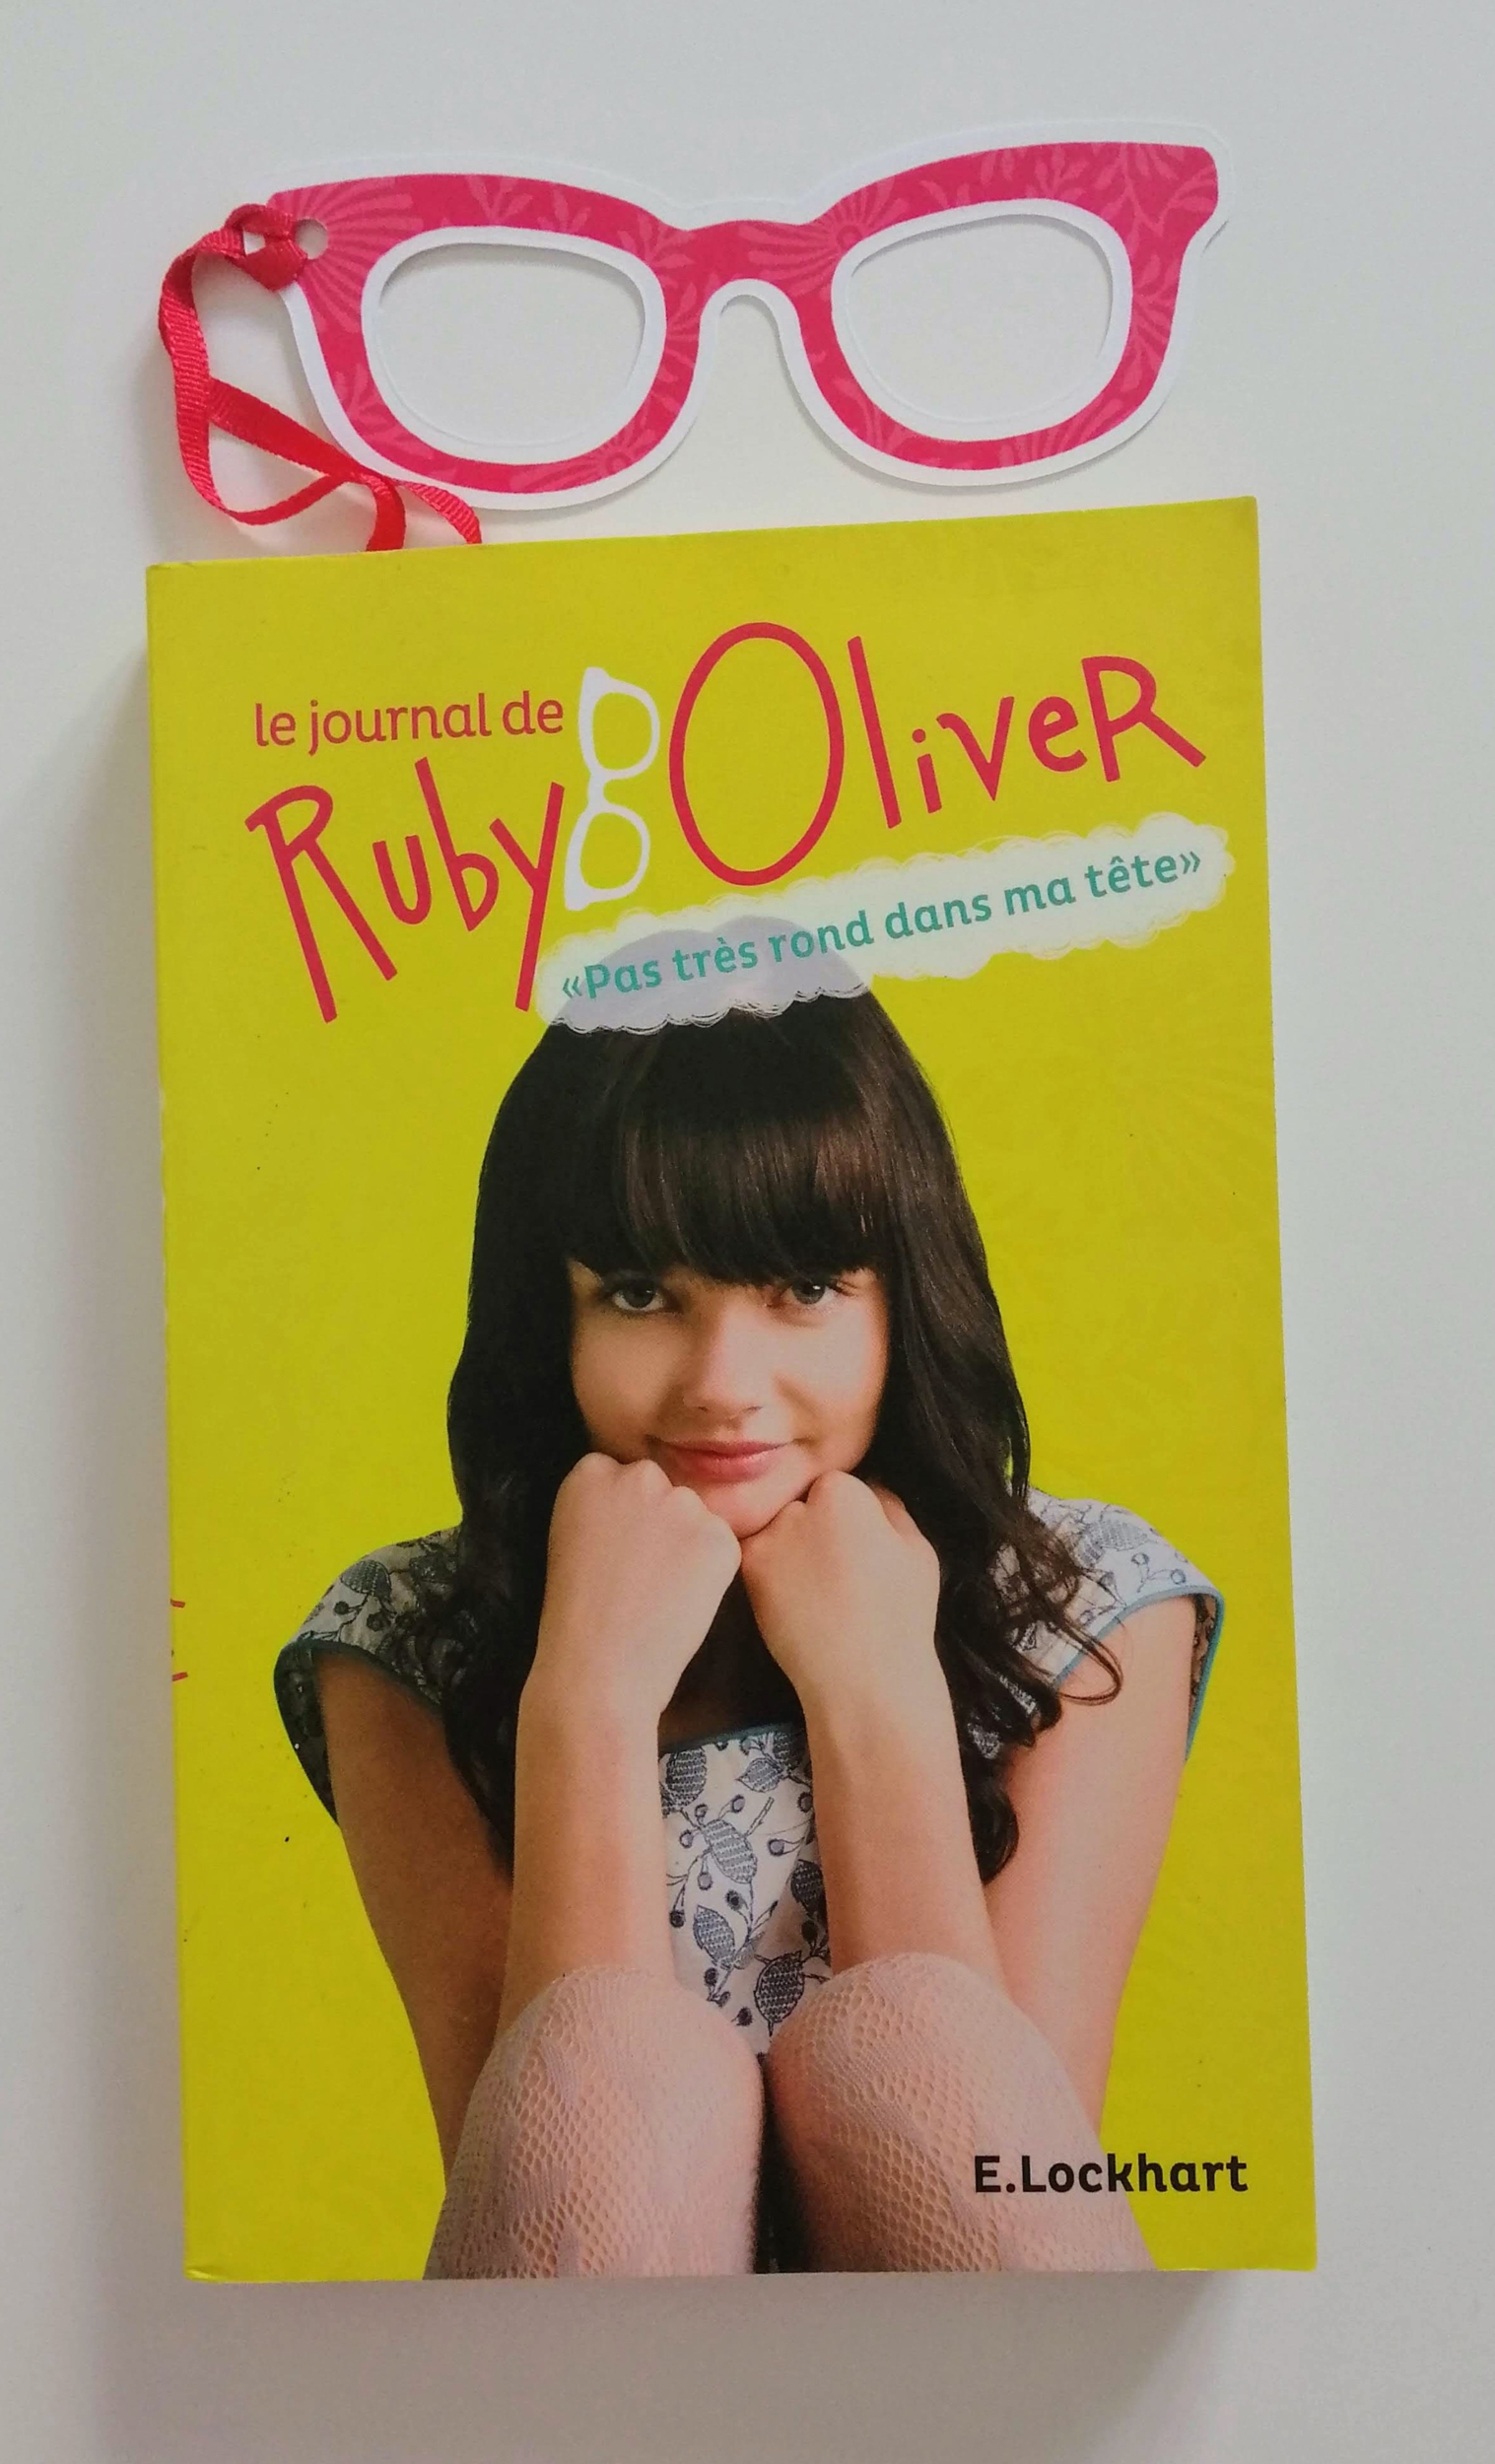 Le journal de Ruby Oliver (E. Lockhart)